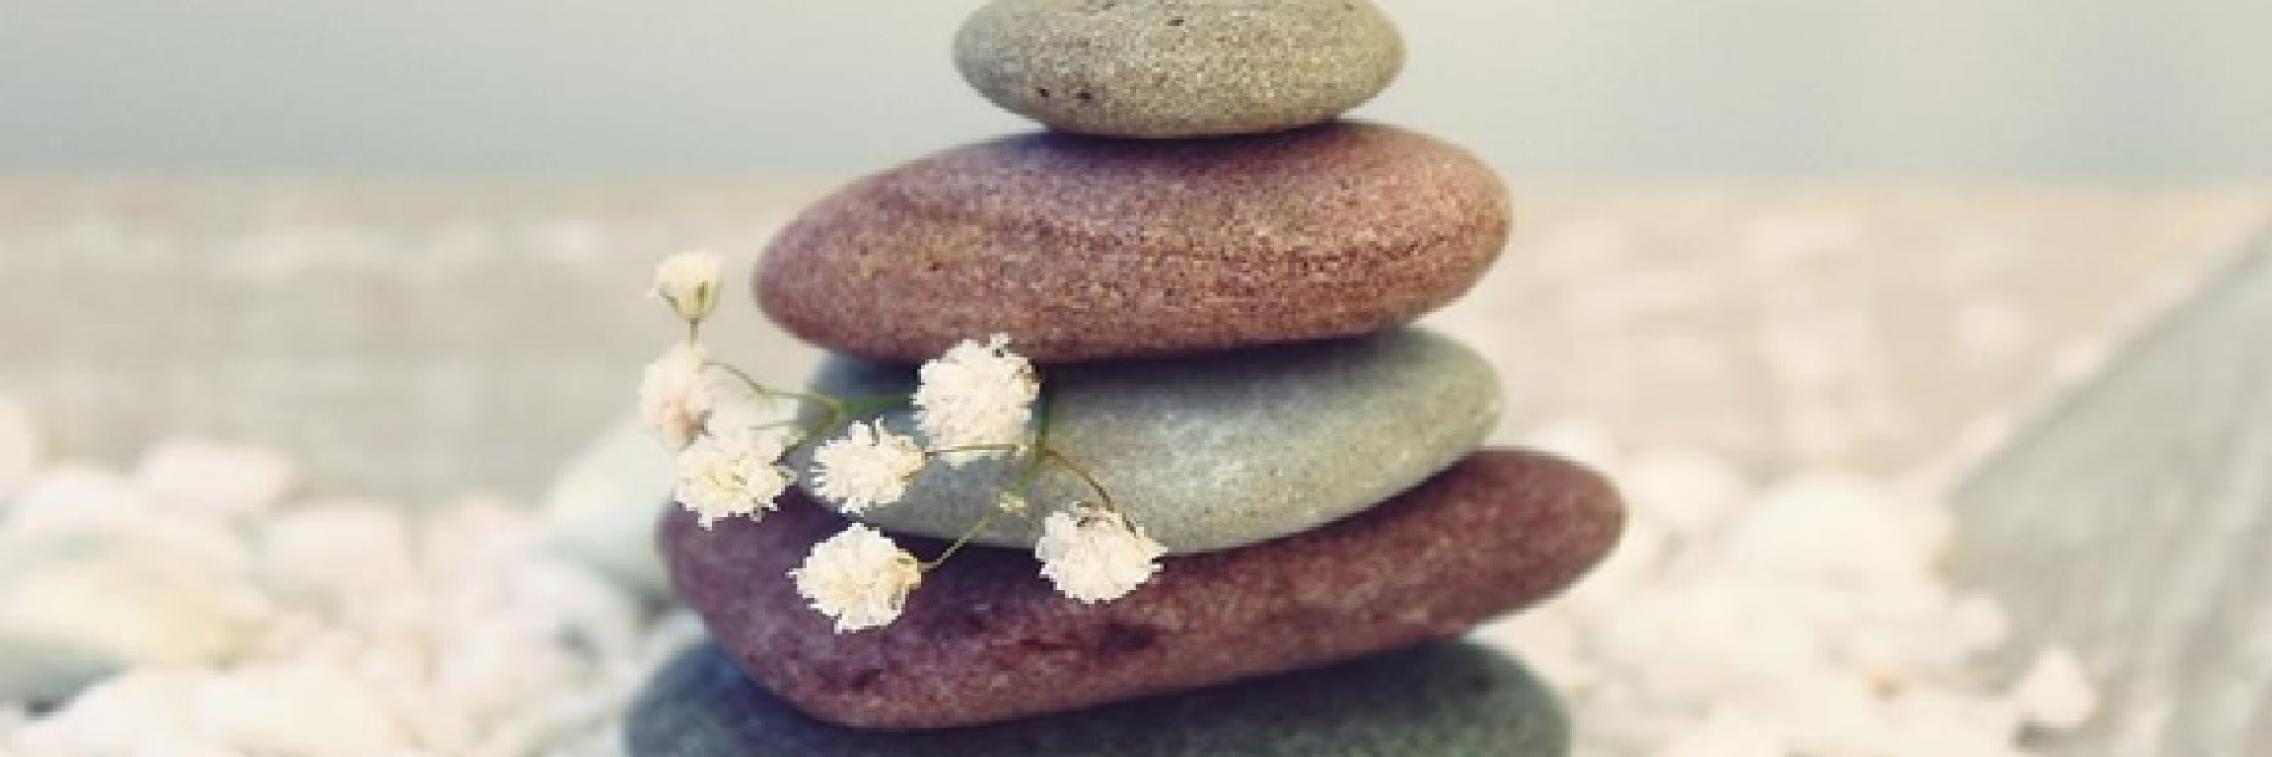 Meditation stones image